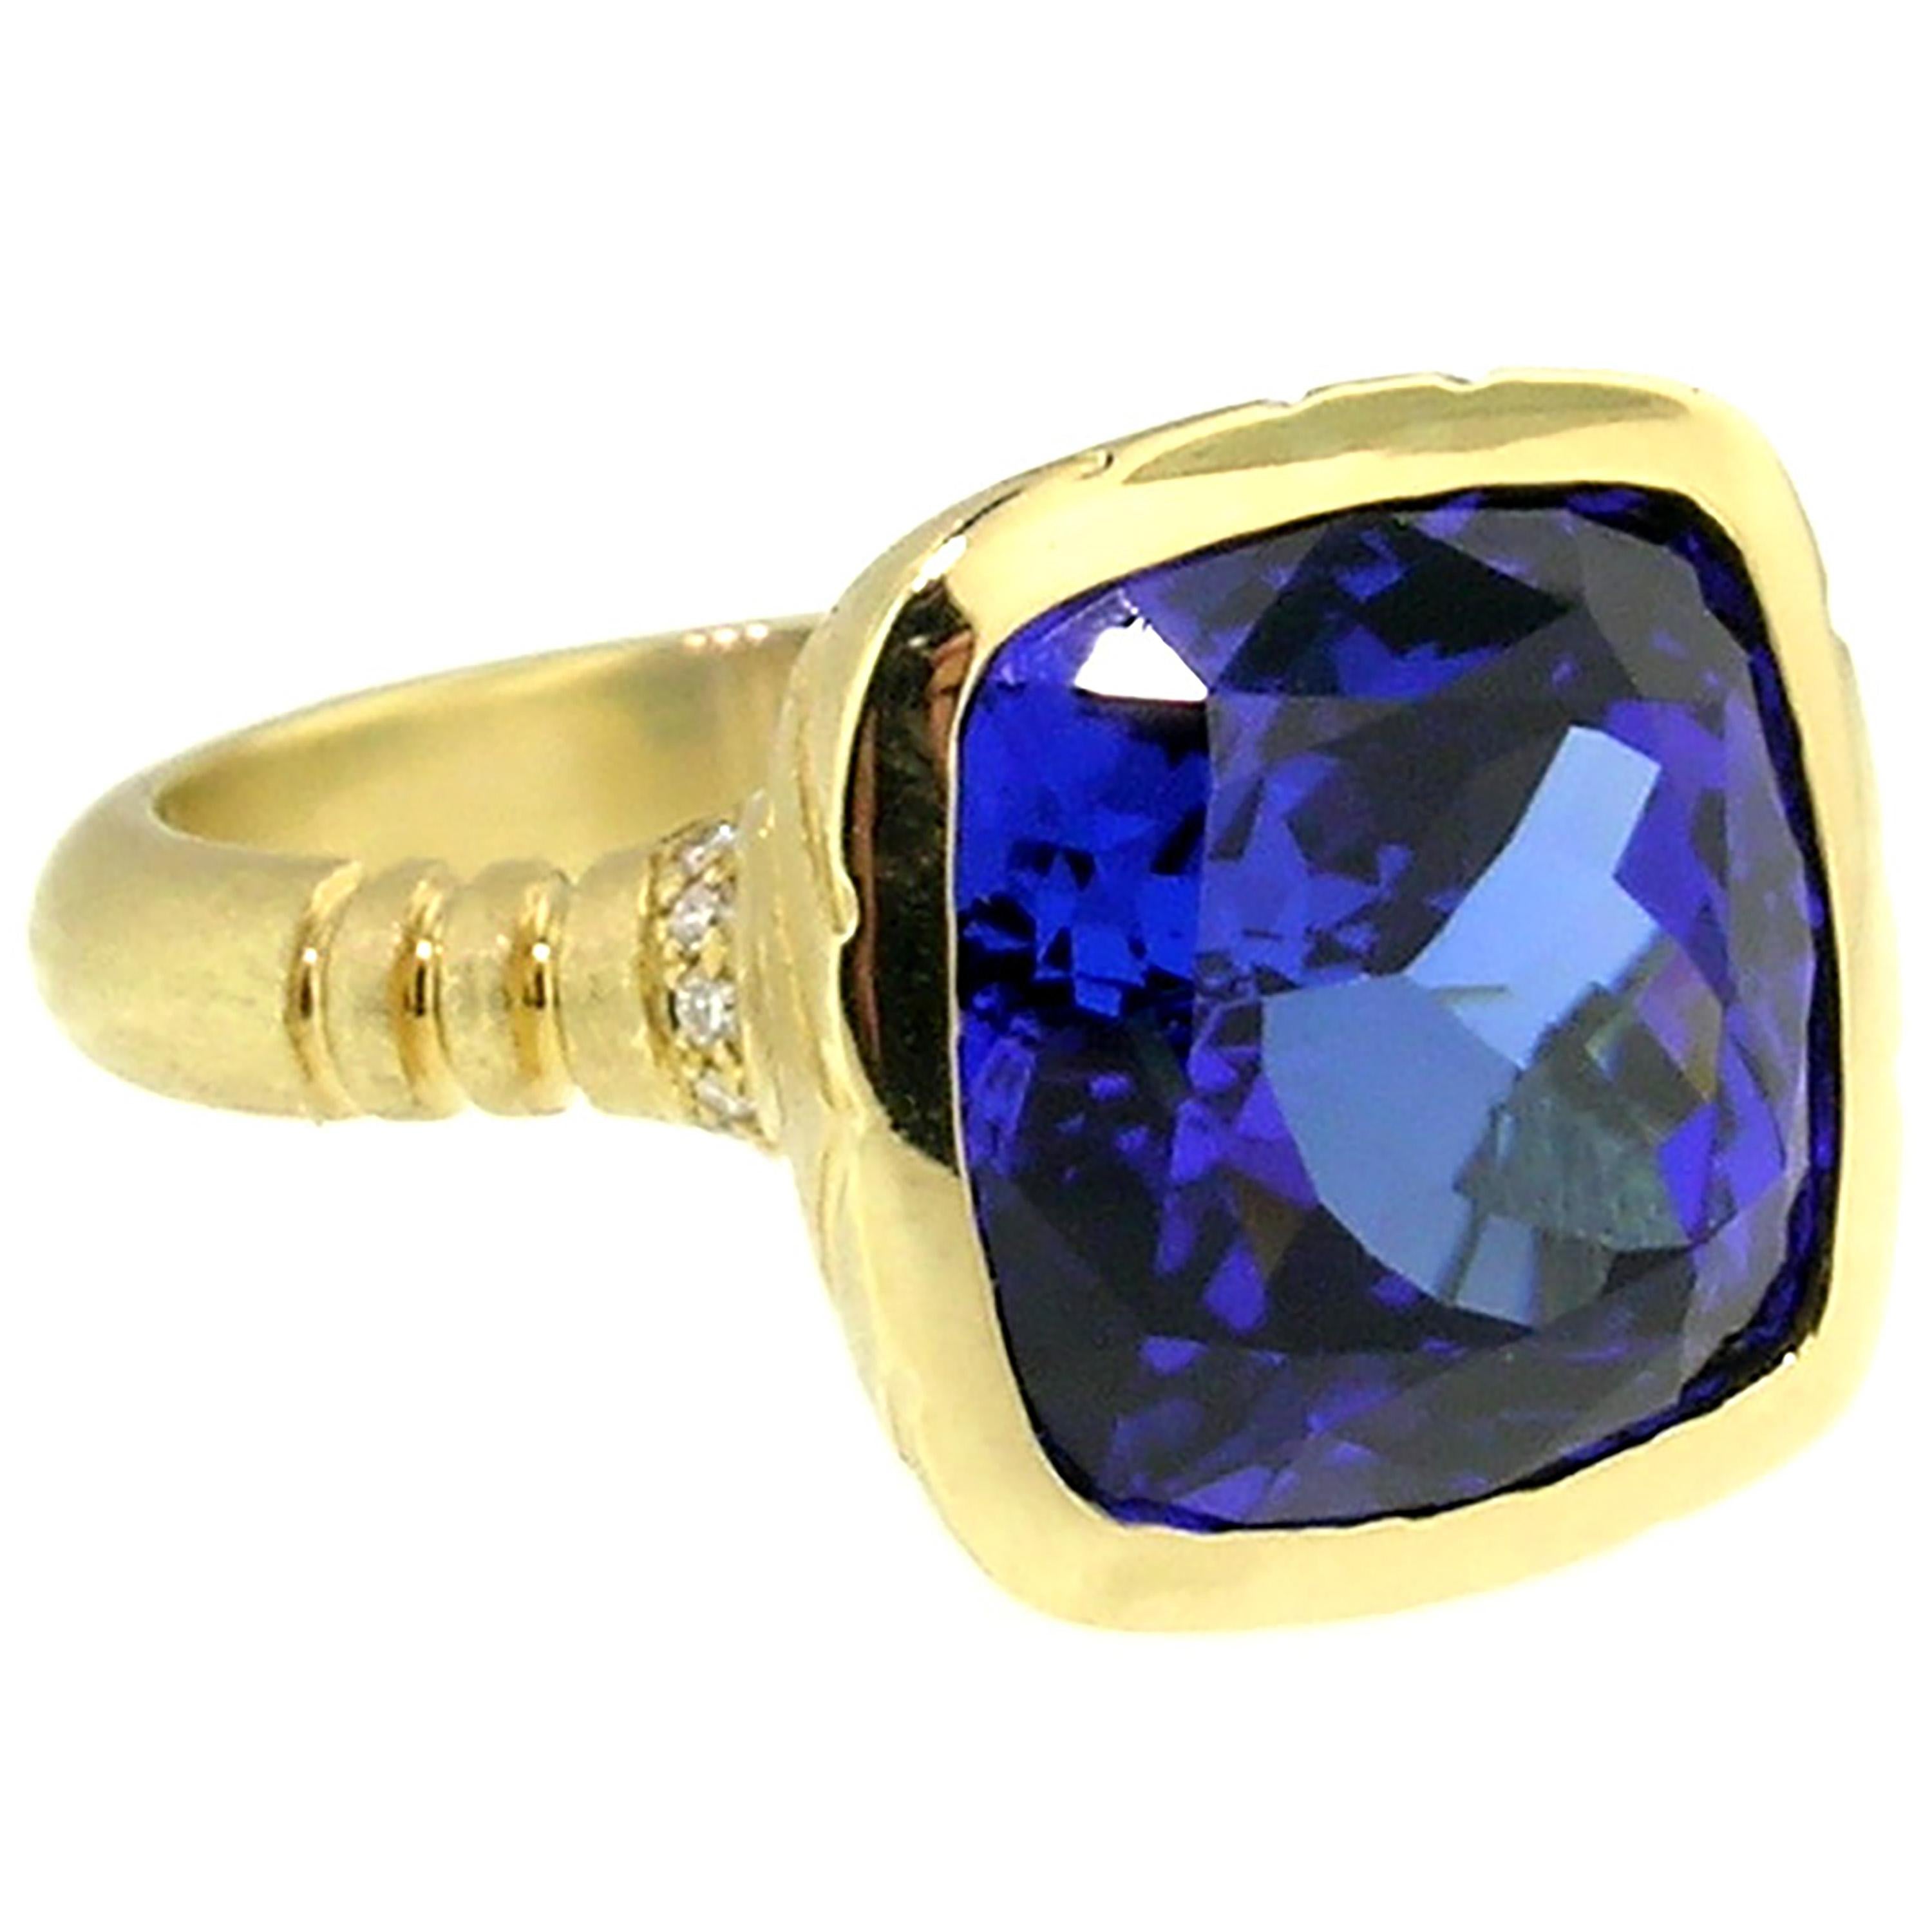 Cynthia Scott Jewelry 10.52 Carat Tanzanite in 18 Karat Gold Ring In New Condition For Sale In Logan, UT